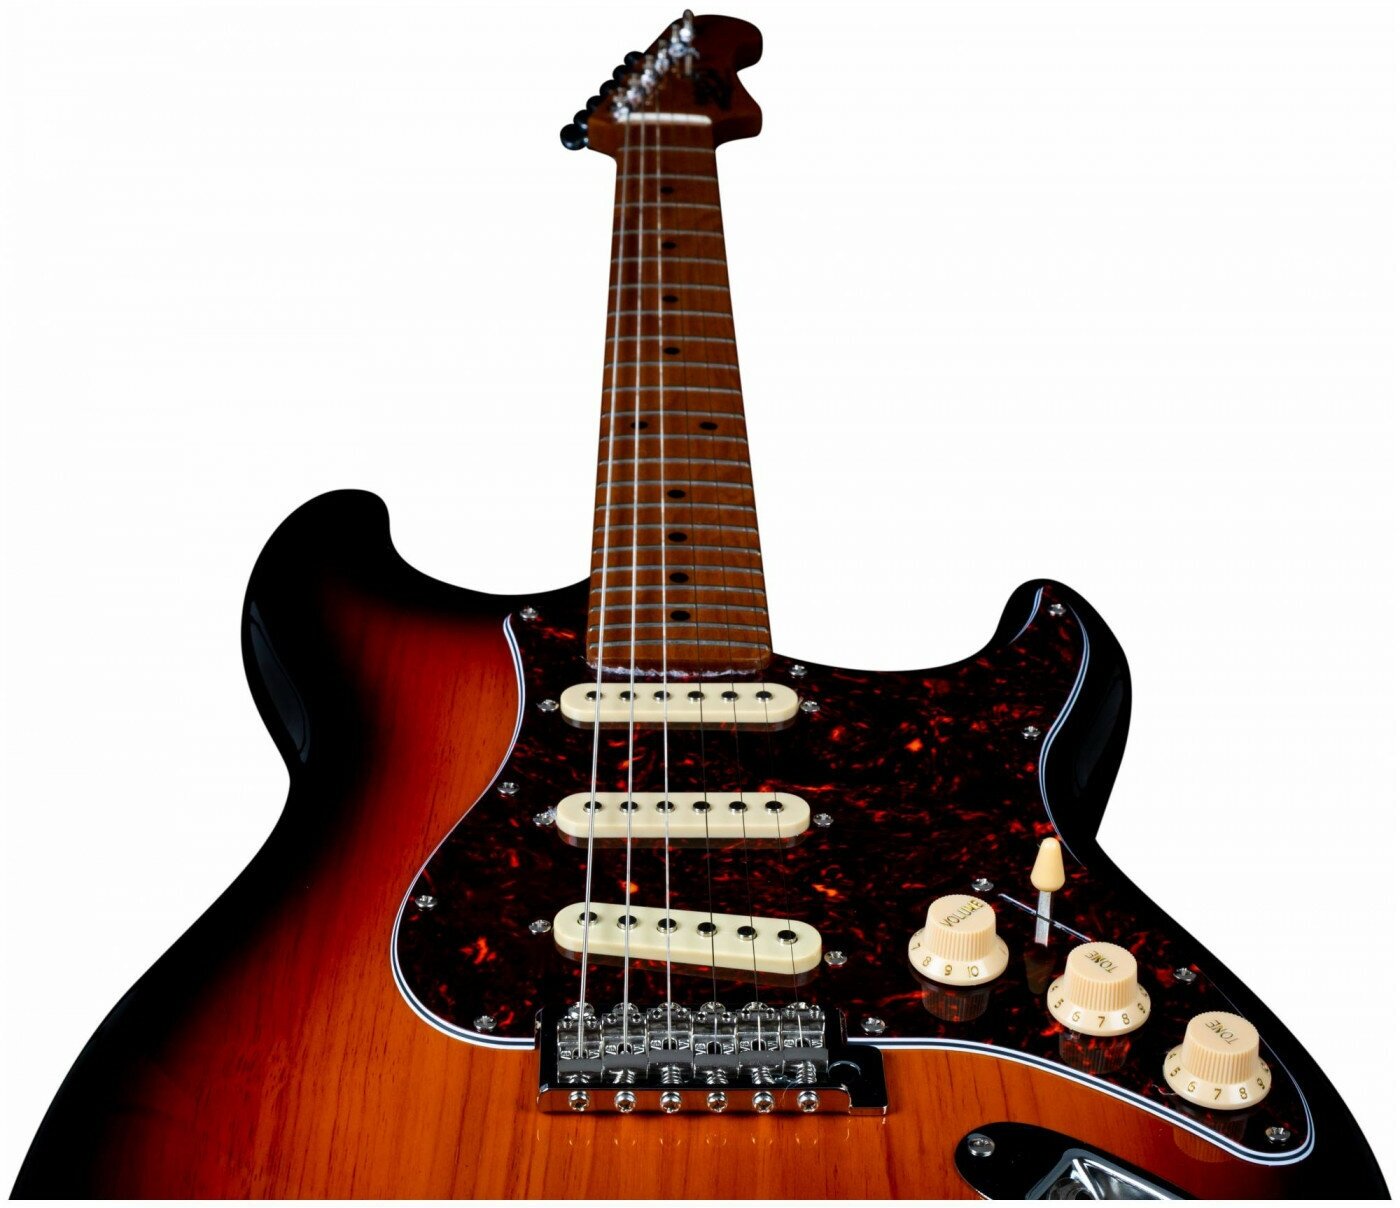 JET JS-300 SB электрогитара, Stratocaster, корпус липа, 22 лада, SSS, tremolo, цвет SB